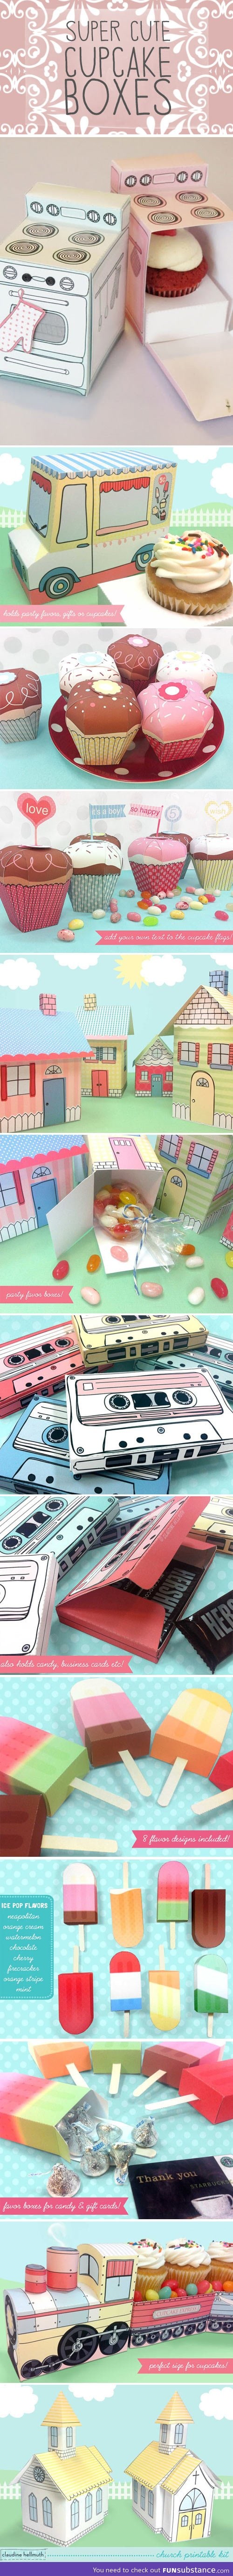 Cute and creative cupcake boxes